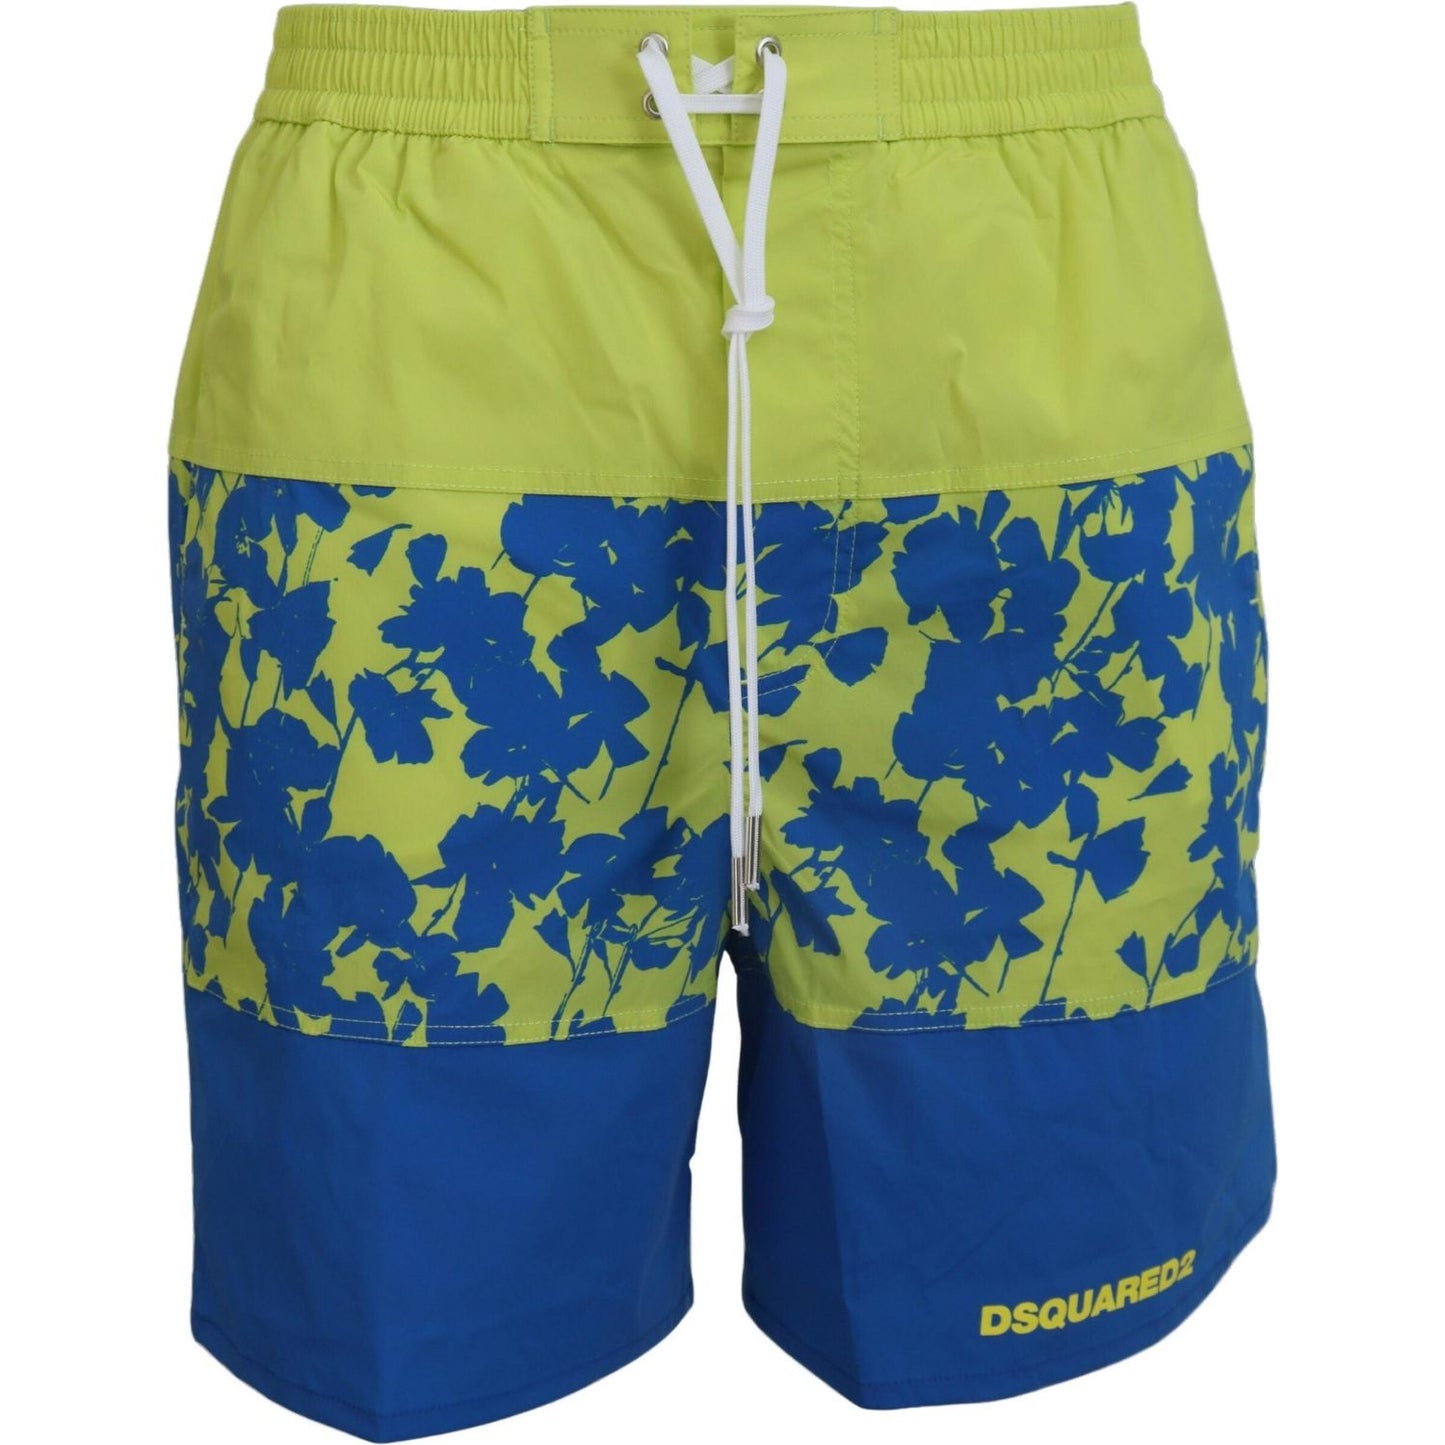 Dsquared² Exquisite Blue Green Swim Shorts Boxer blue-green-logo-print-men-beachwear-shorts-swimwear IMG_6005-scaled-7b0c543a-7eb.jpg